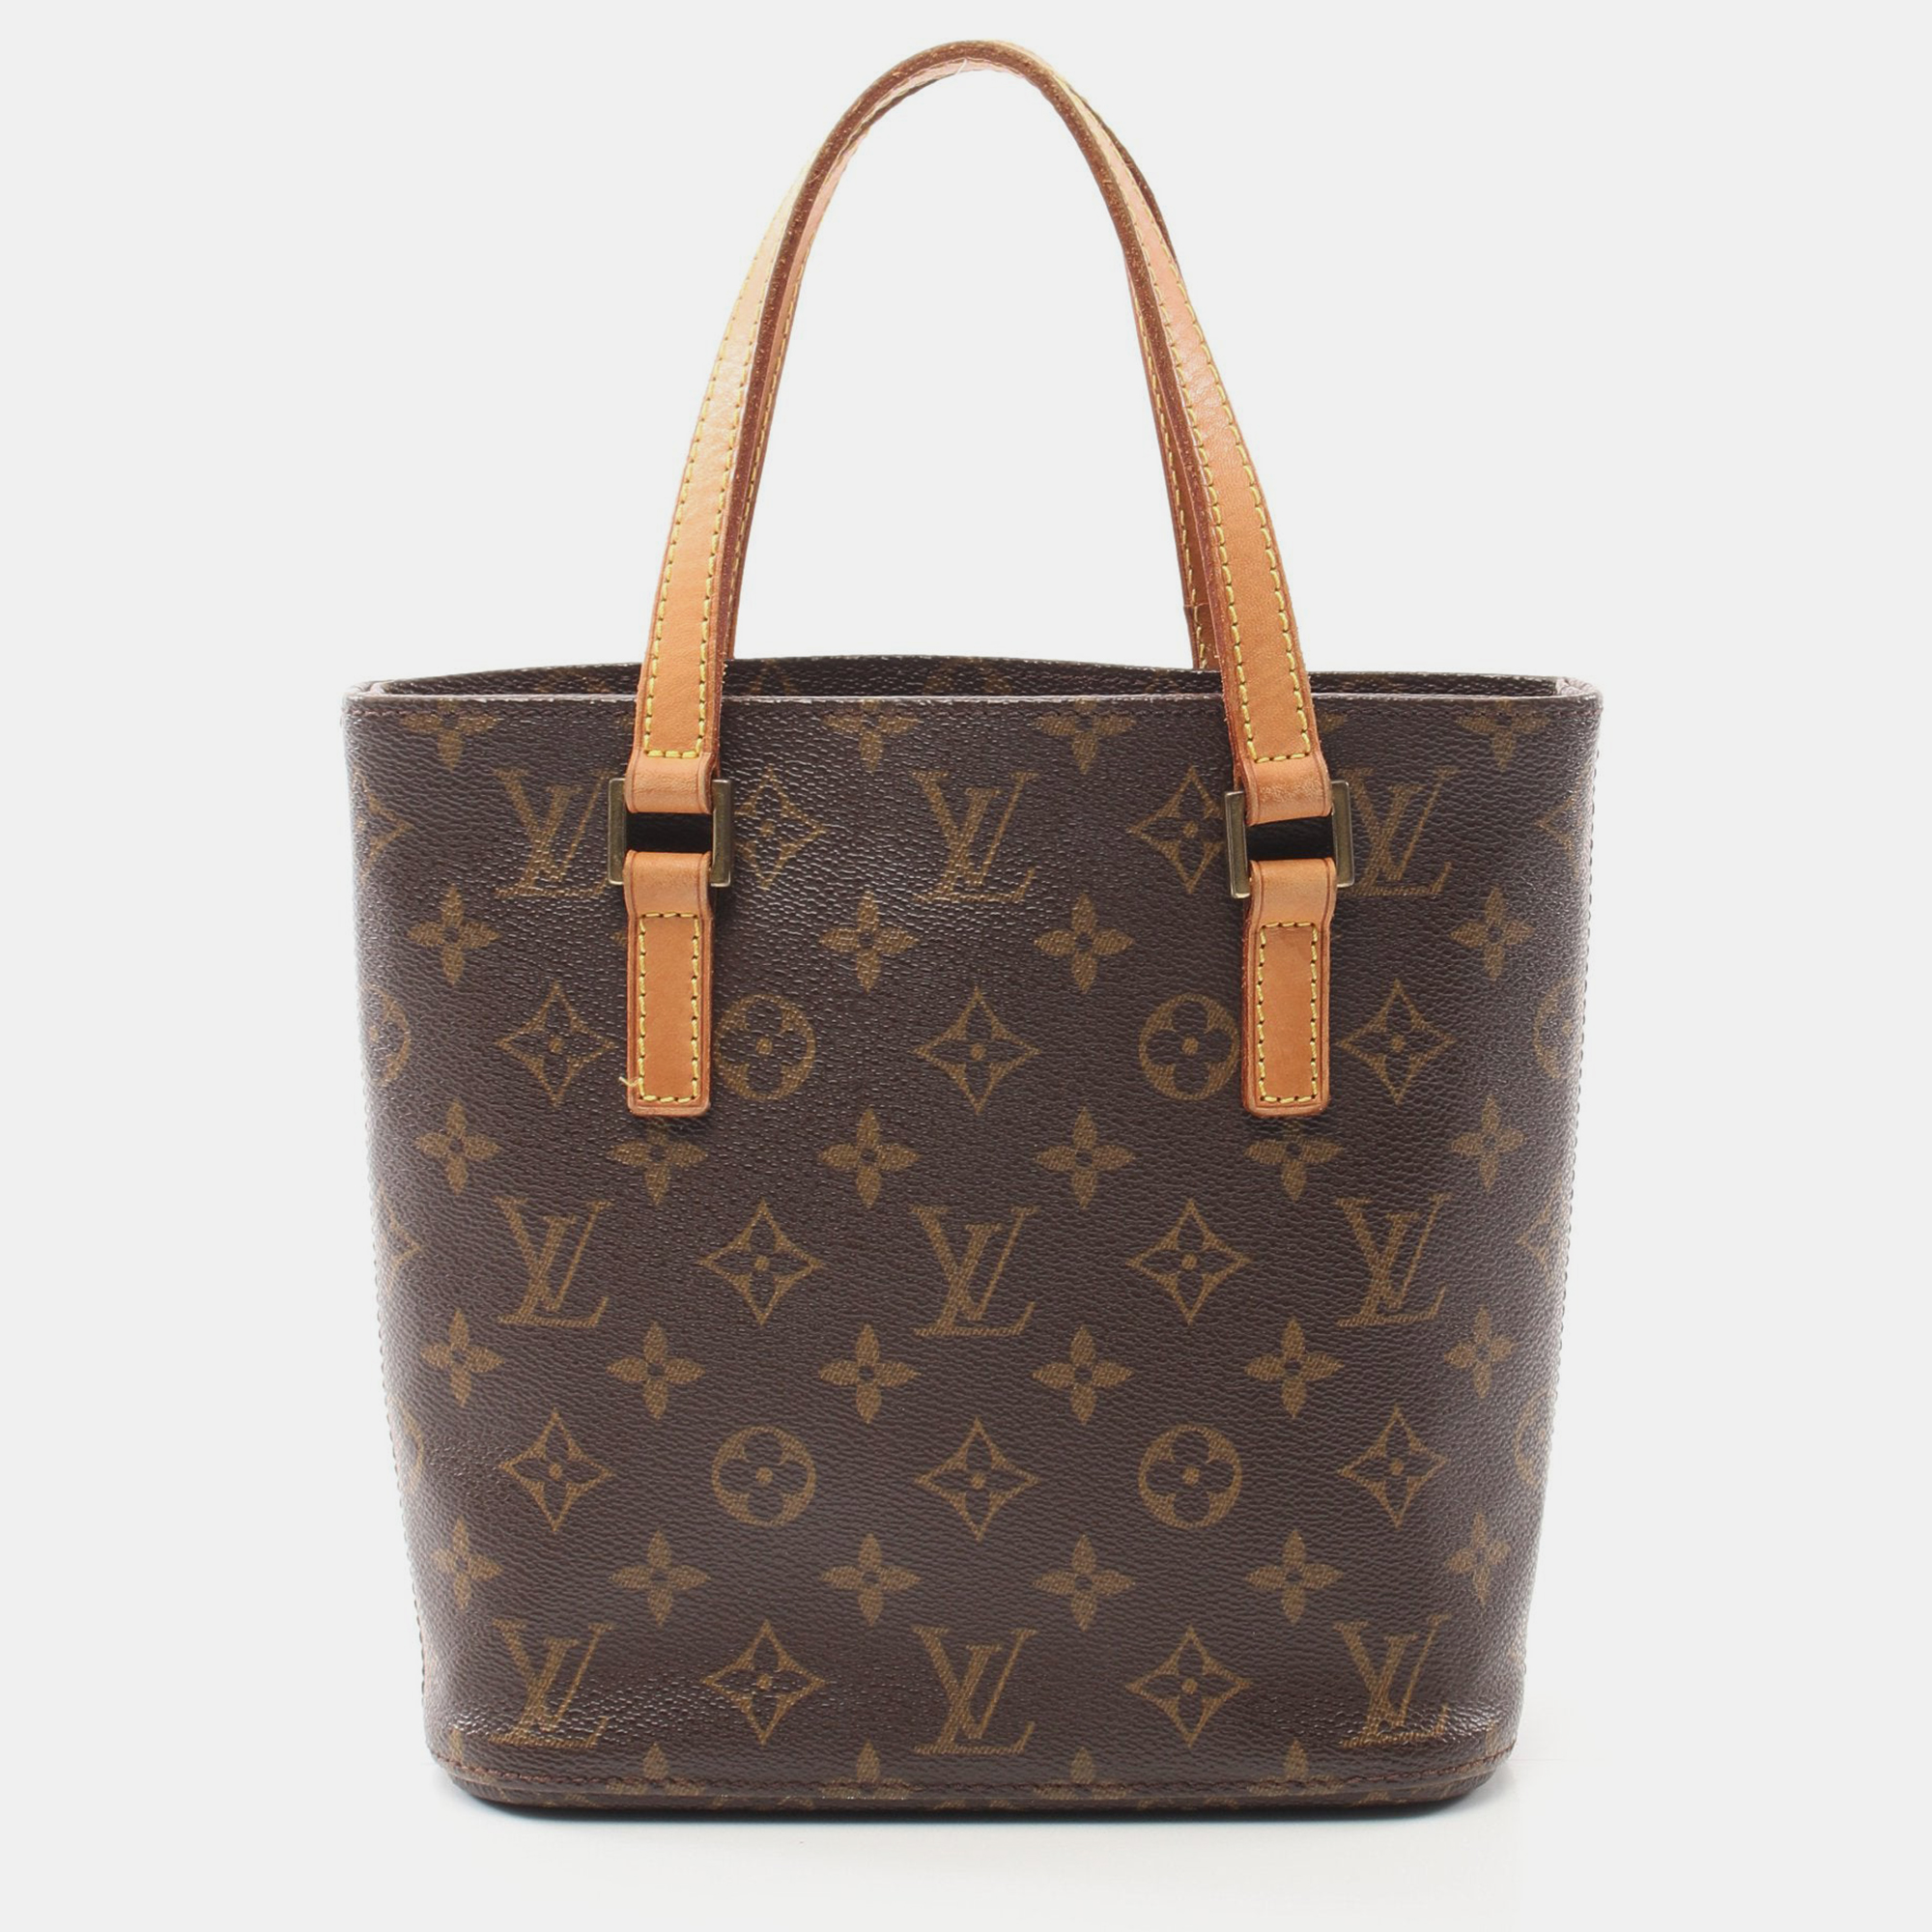 Louis vuitton vavin pm monogram handbag pvc leather brown